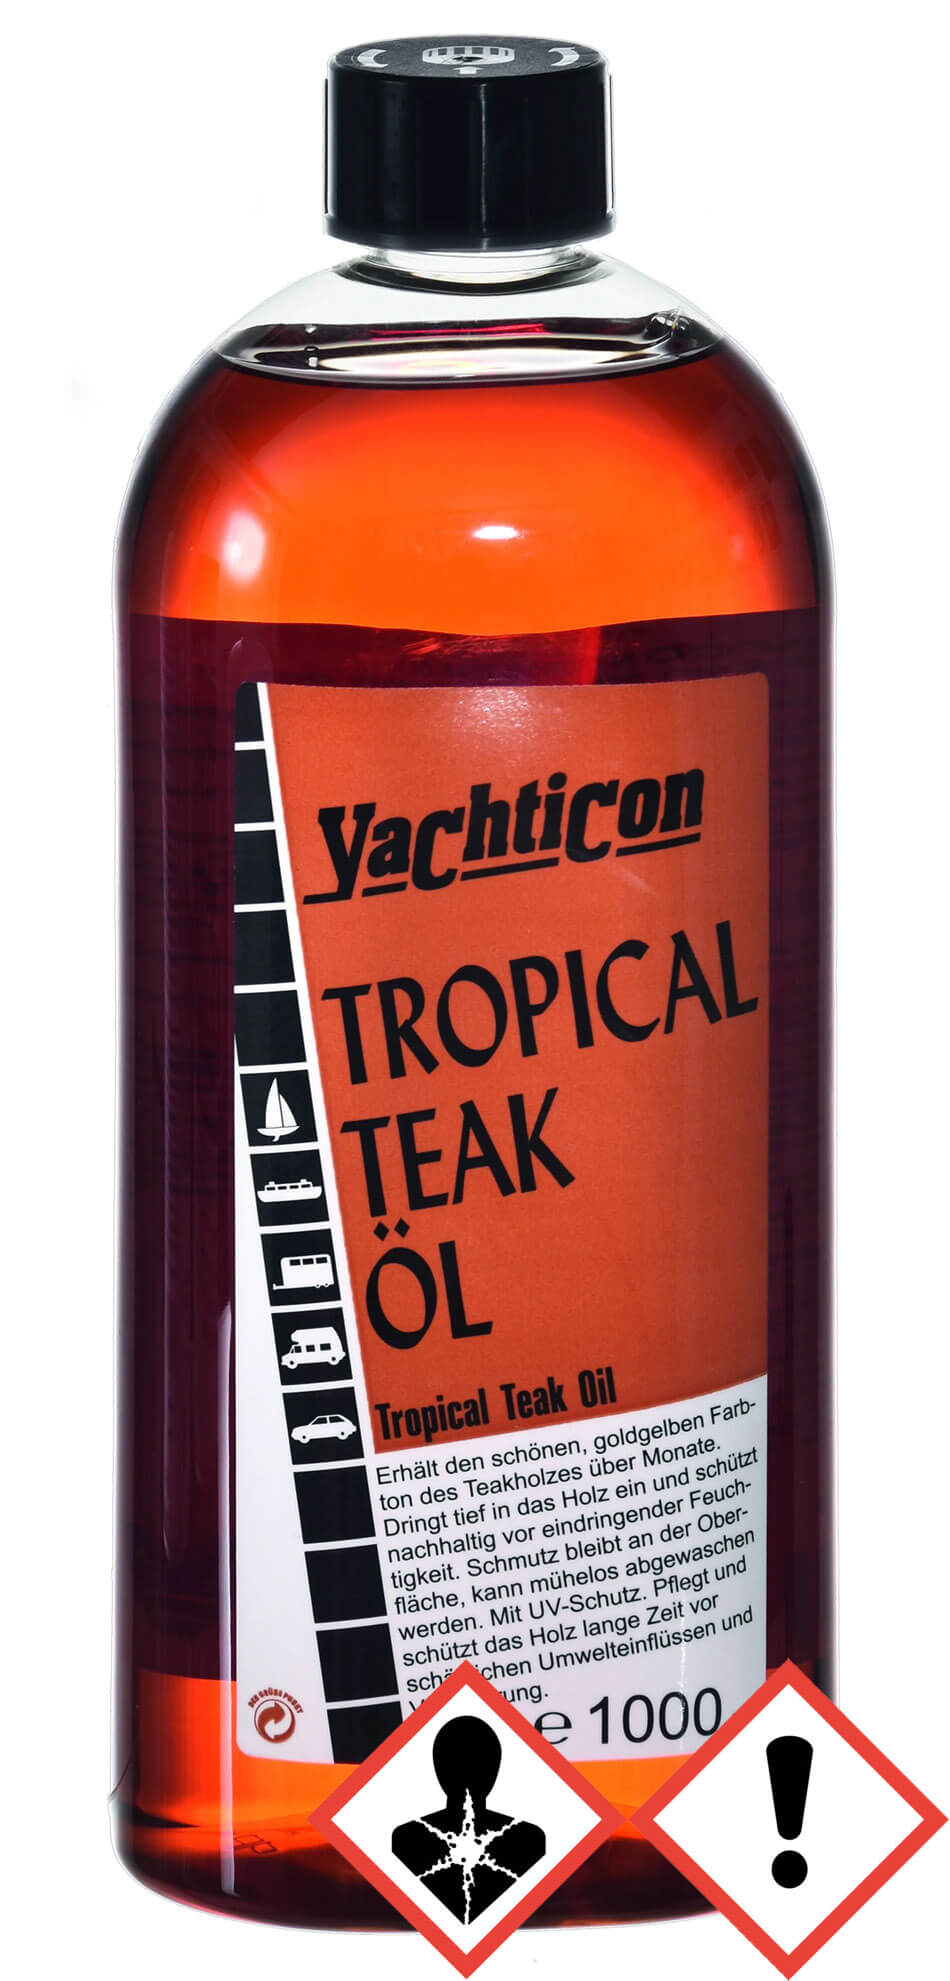 Tropical Teak Öl